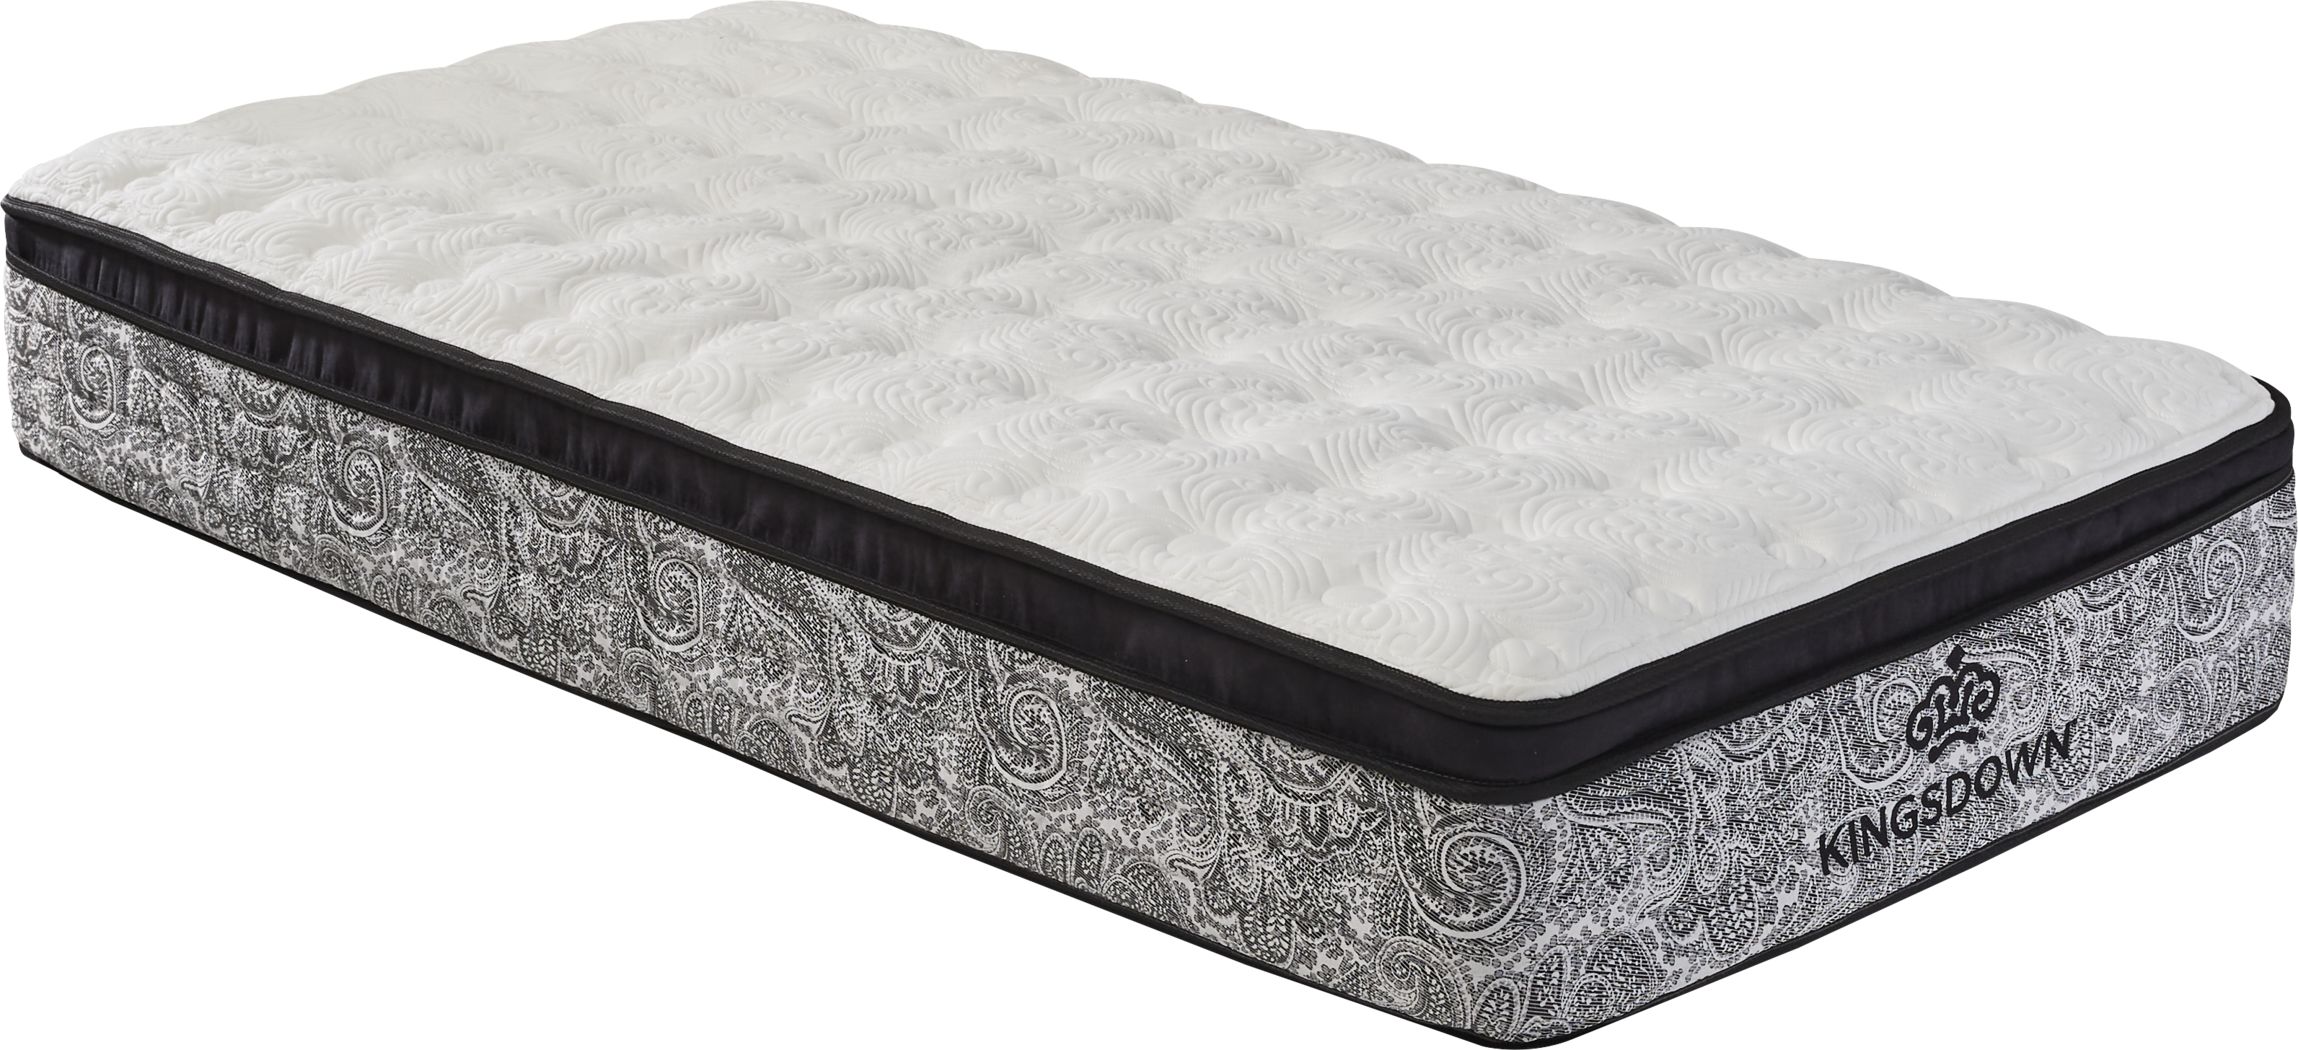 kingsdown twin mattress sets